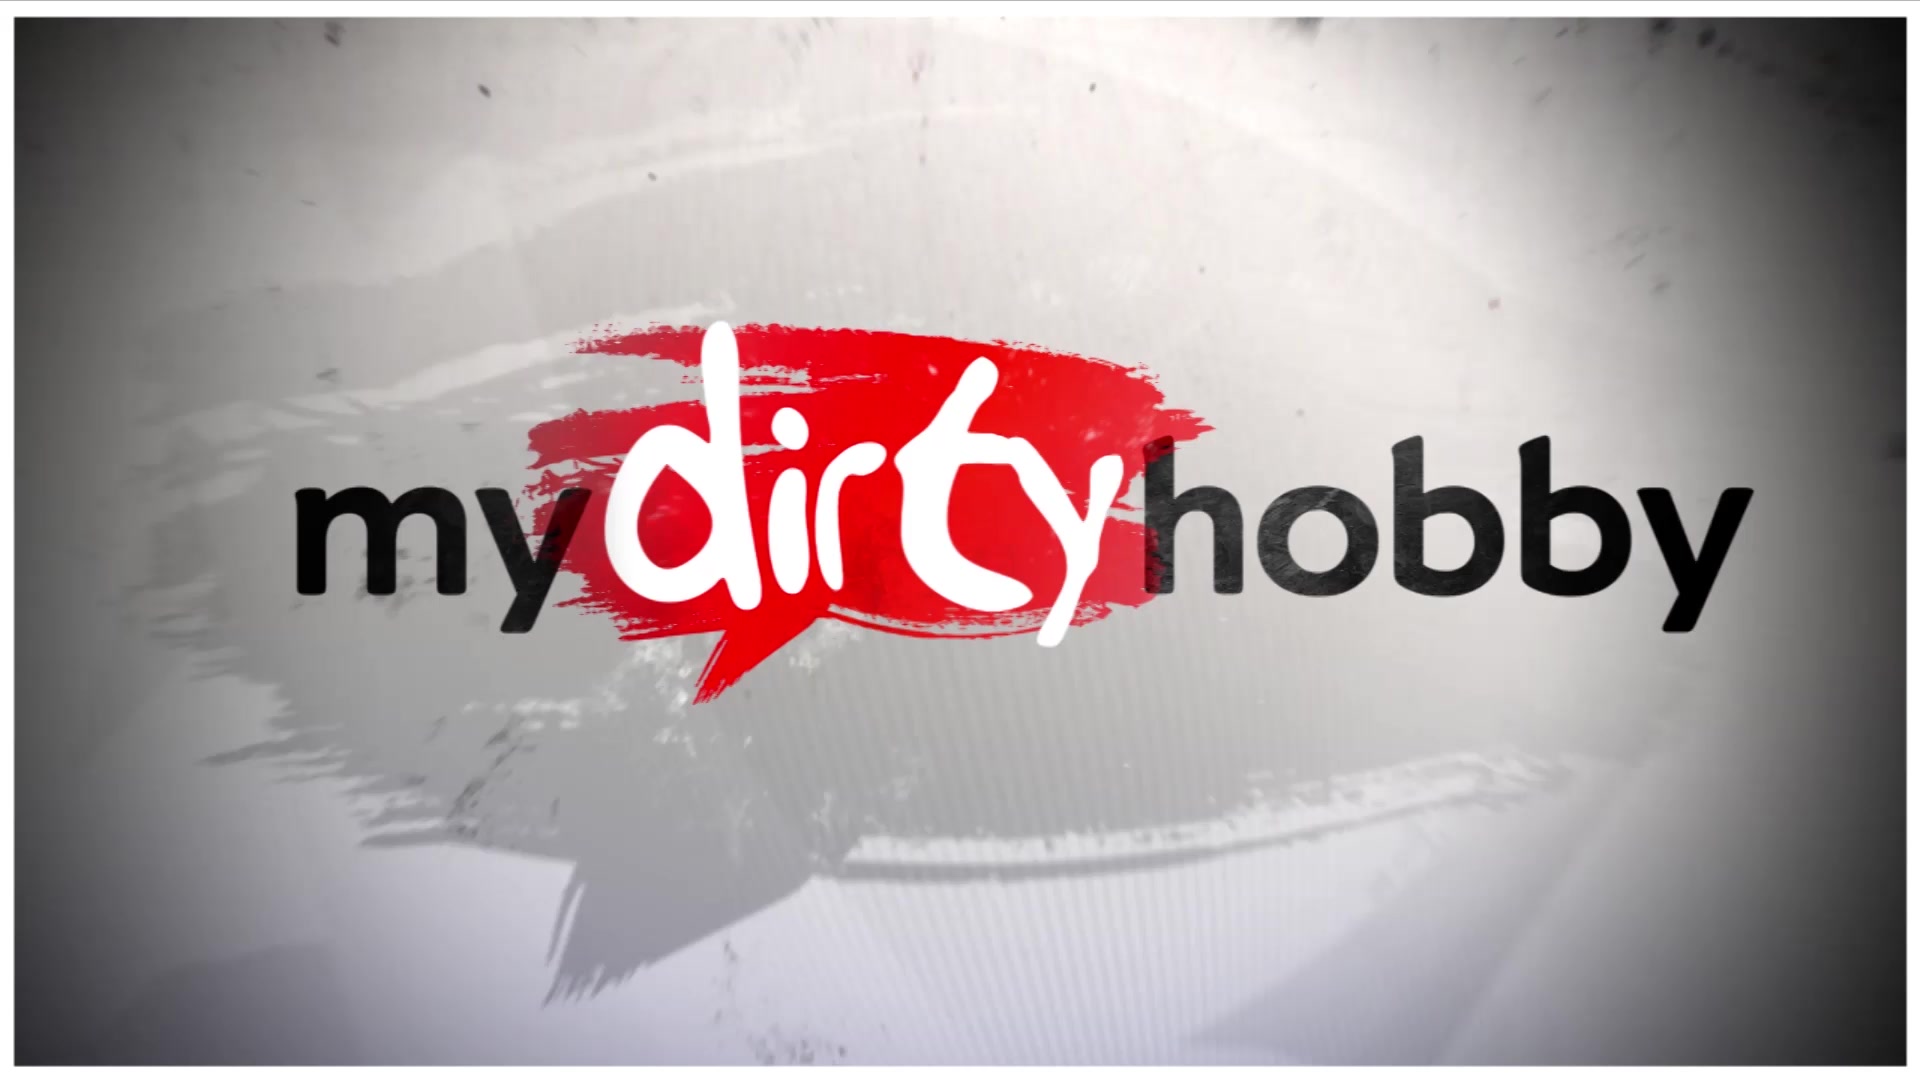 Mydirtyhobby - Top Episodes September 2014